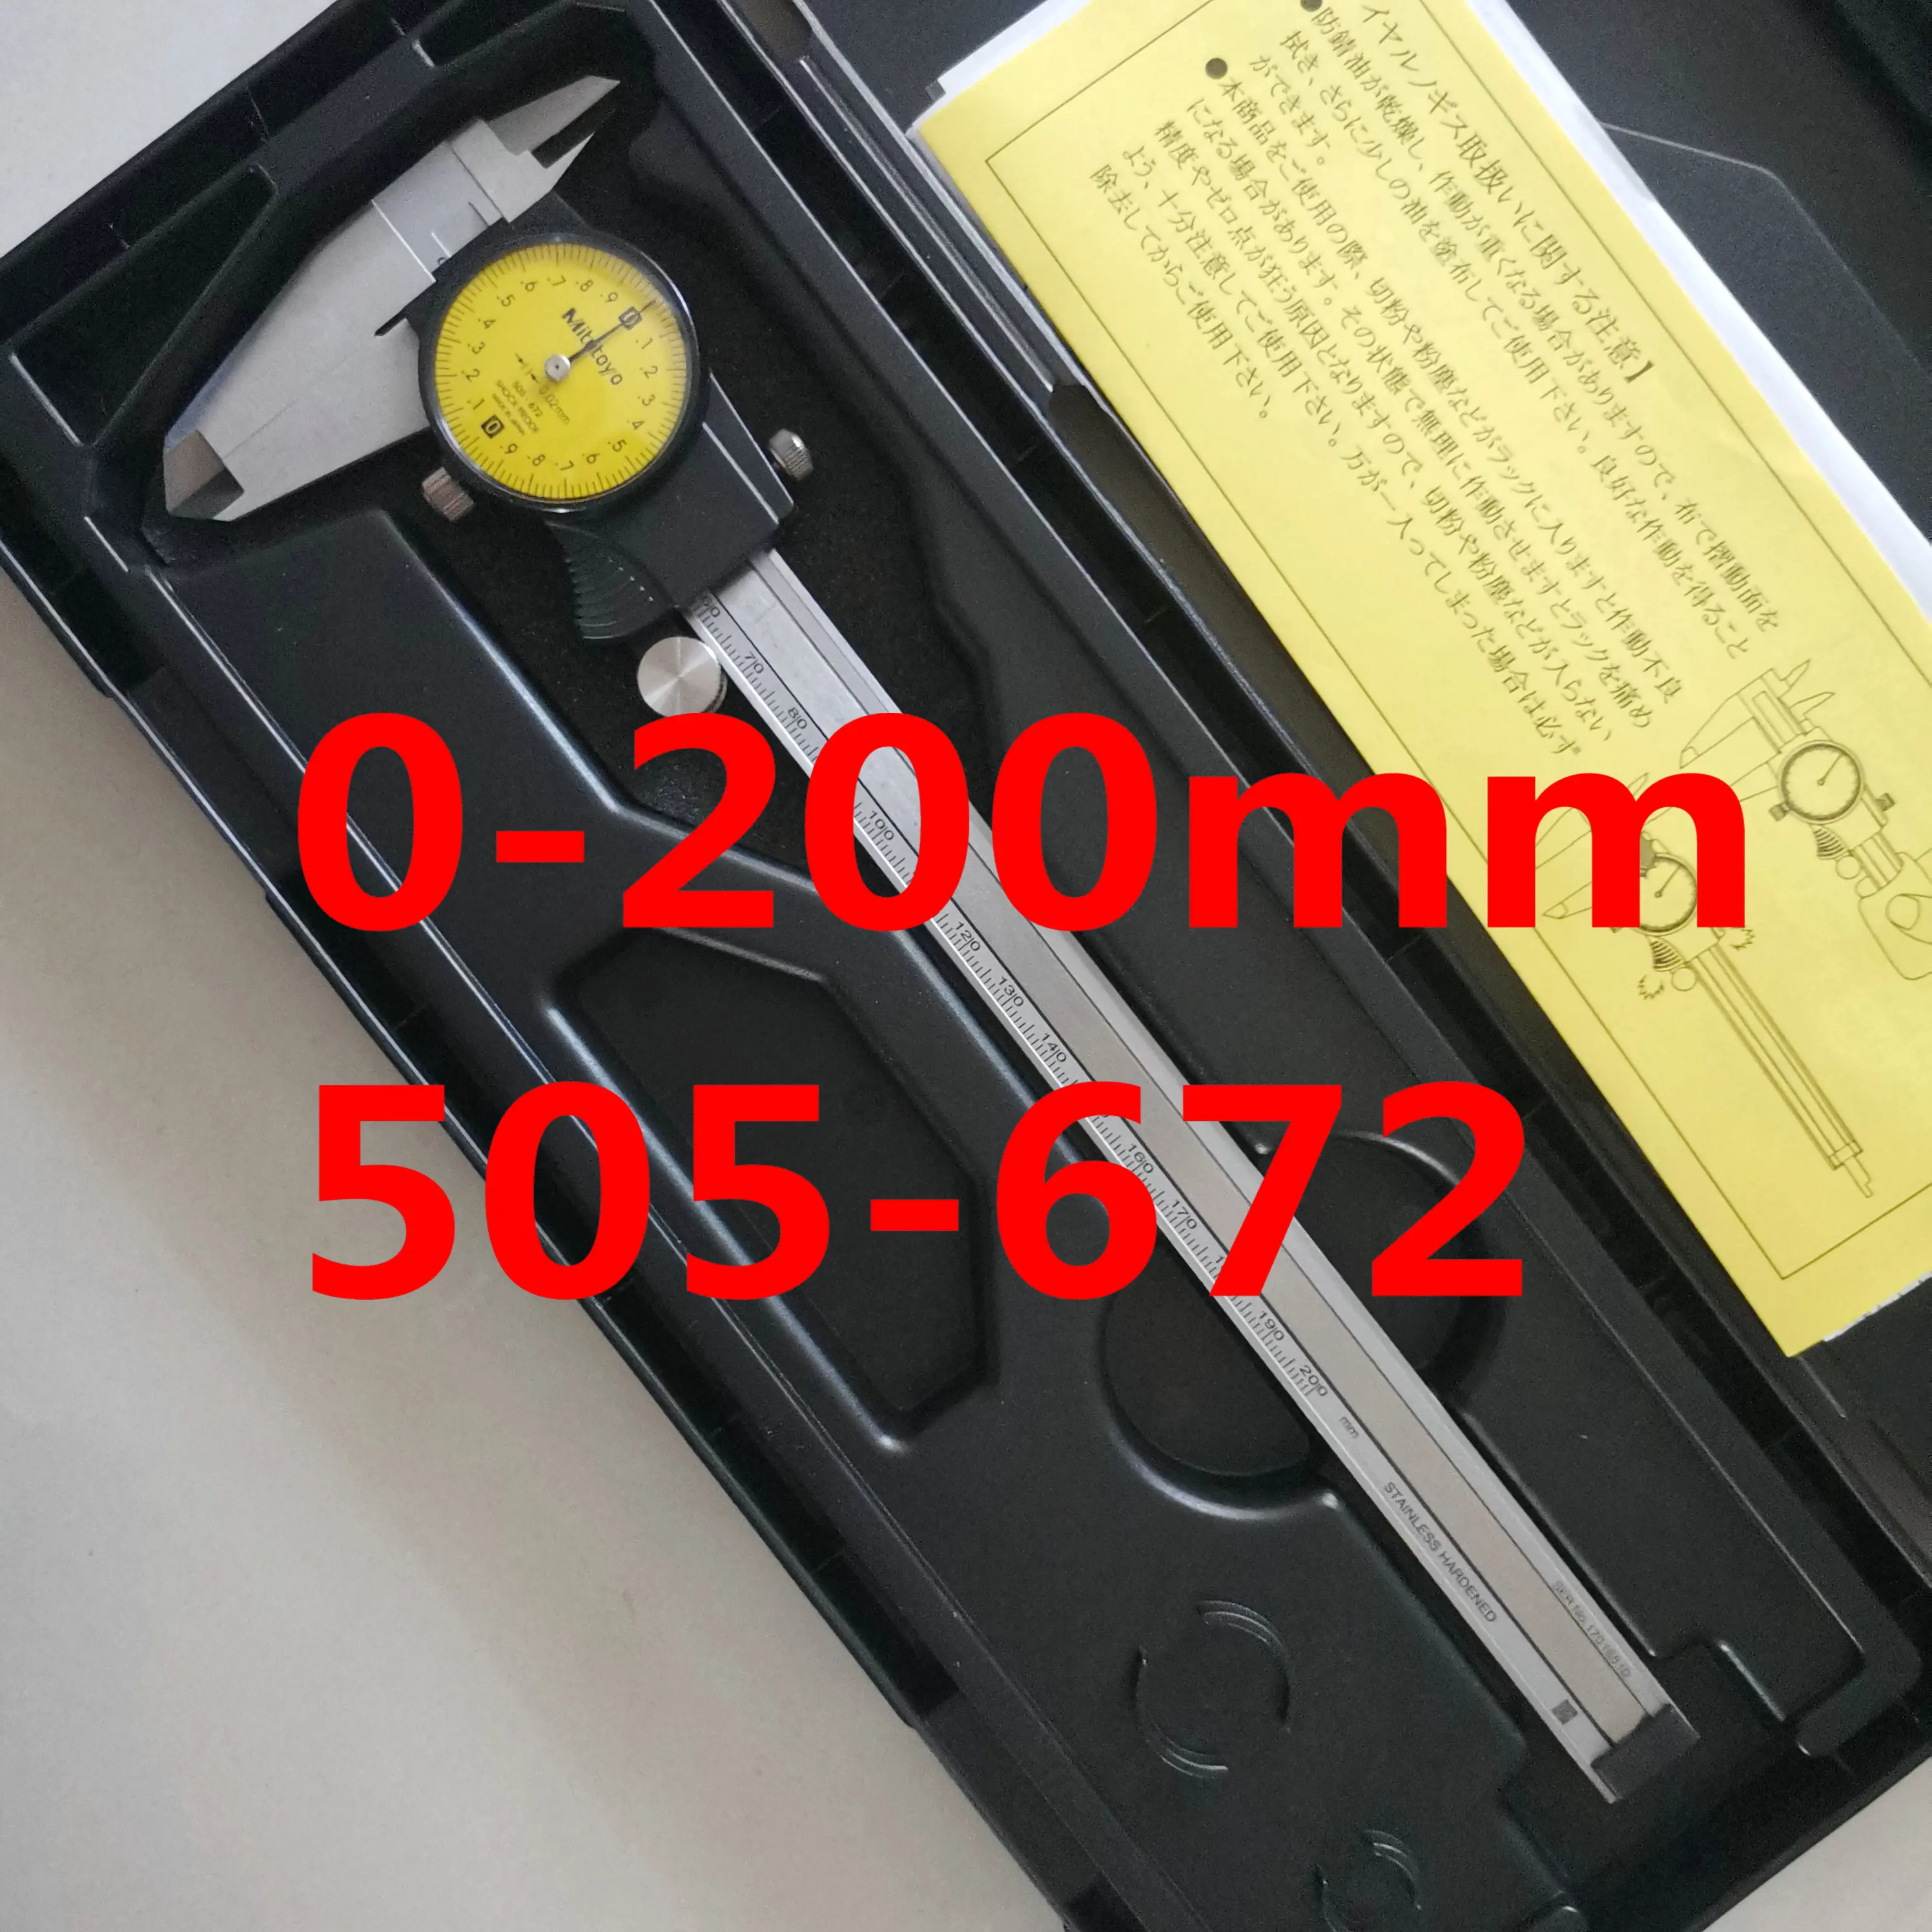 

Mitutoyo ABS Caliper 6in 0-150mm 505-671 200mm 505-672 300mm 505-673 0.02mm Vernier Calipers Measuring Industrial Grade Tools